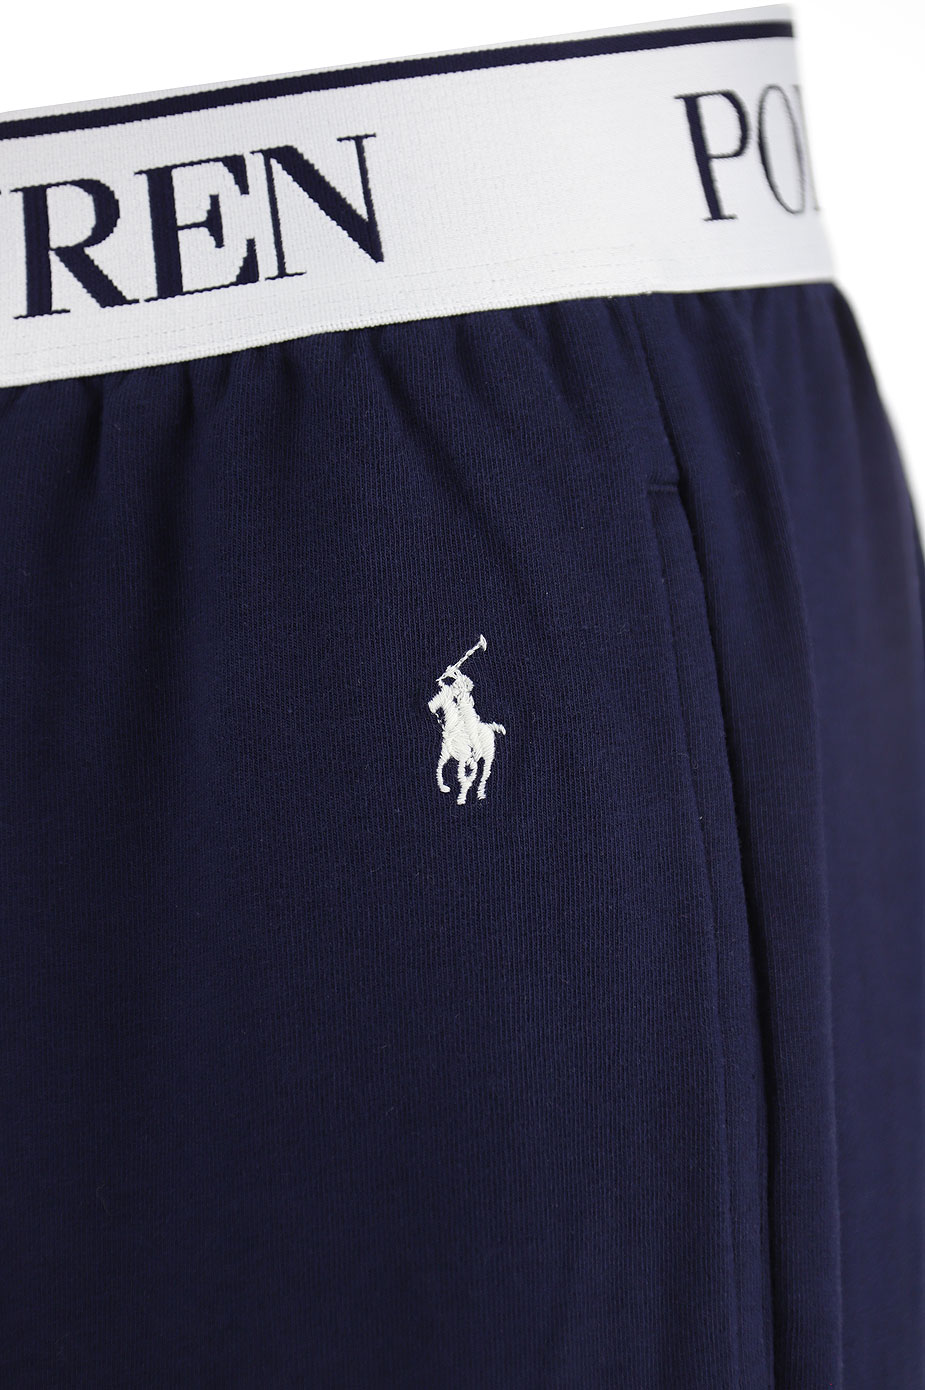 Mens Underwear Ralph Lauren, Style code: 714862624008--